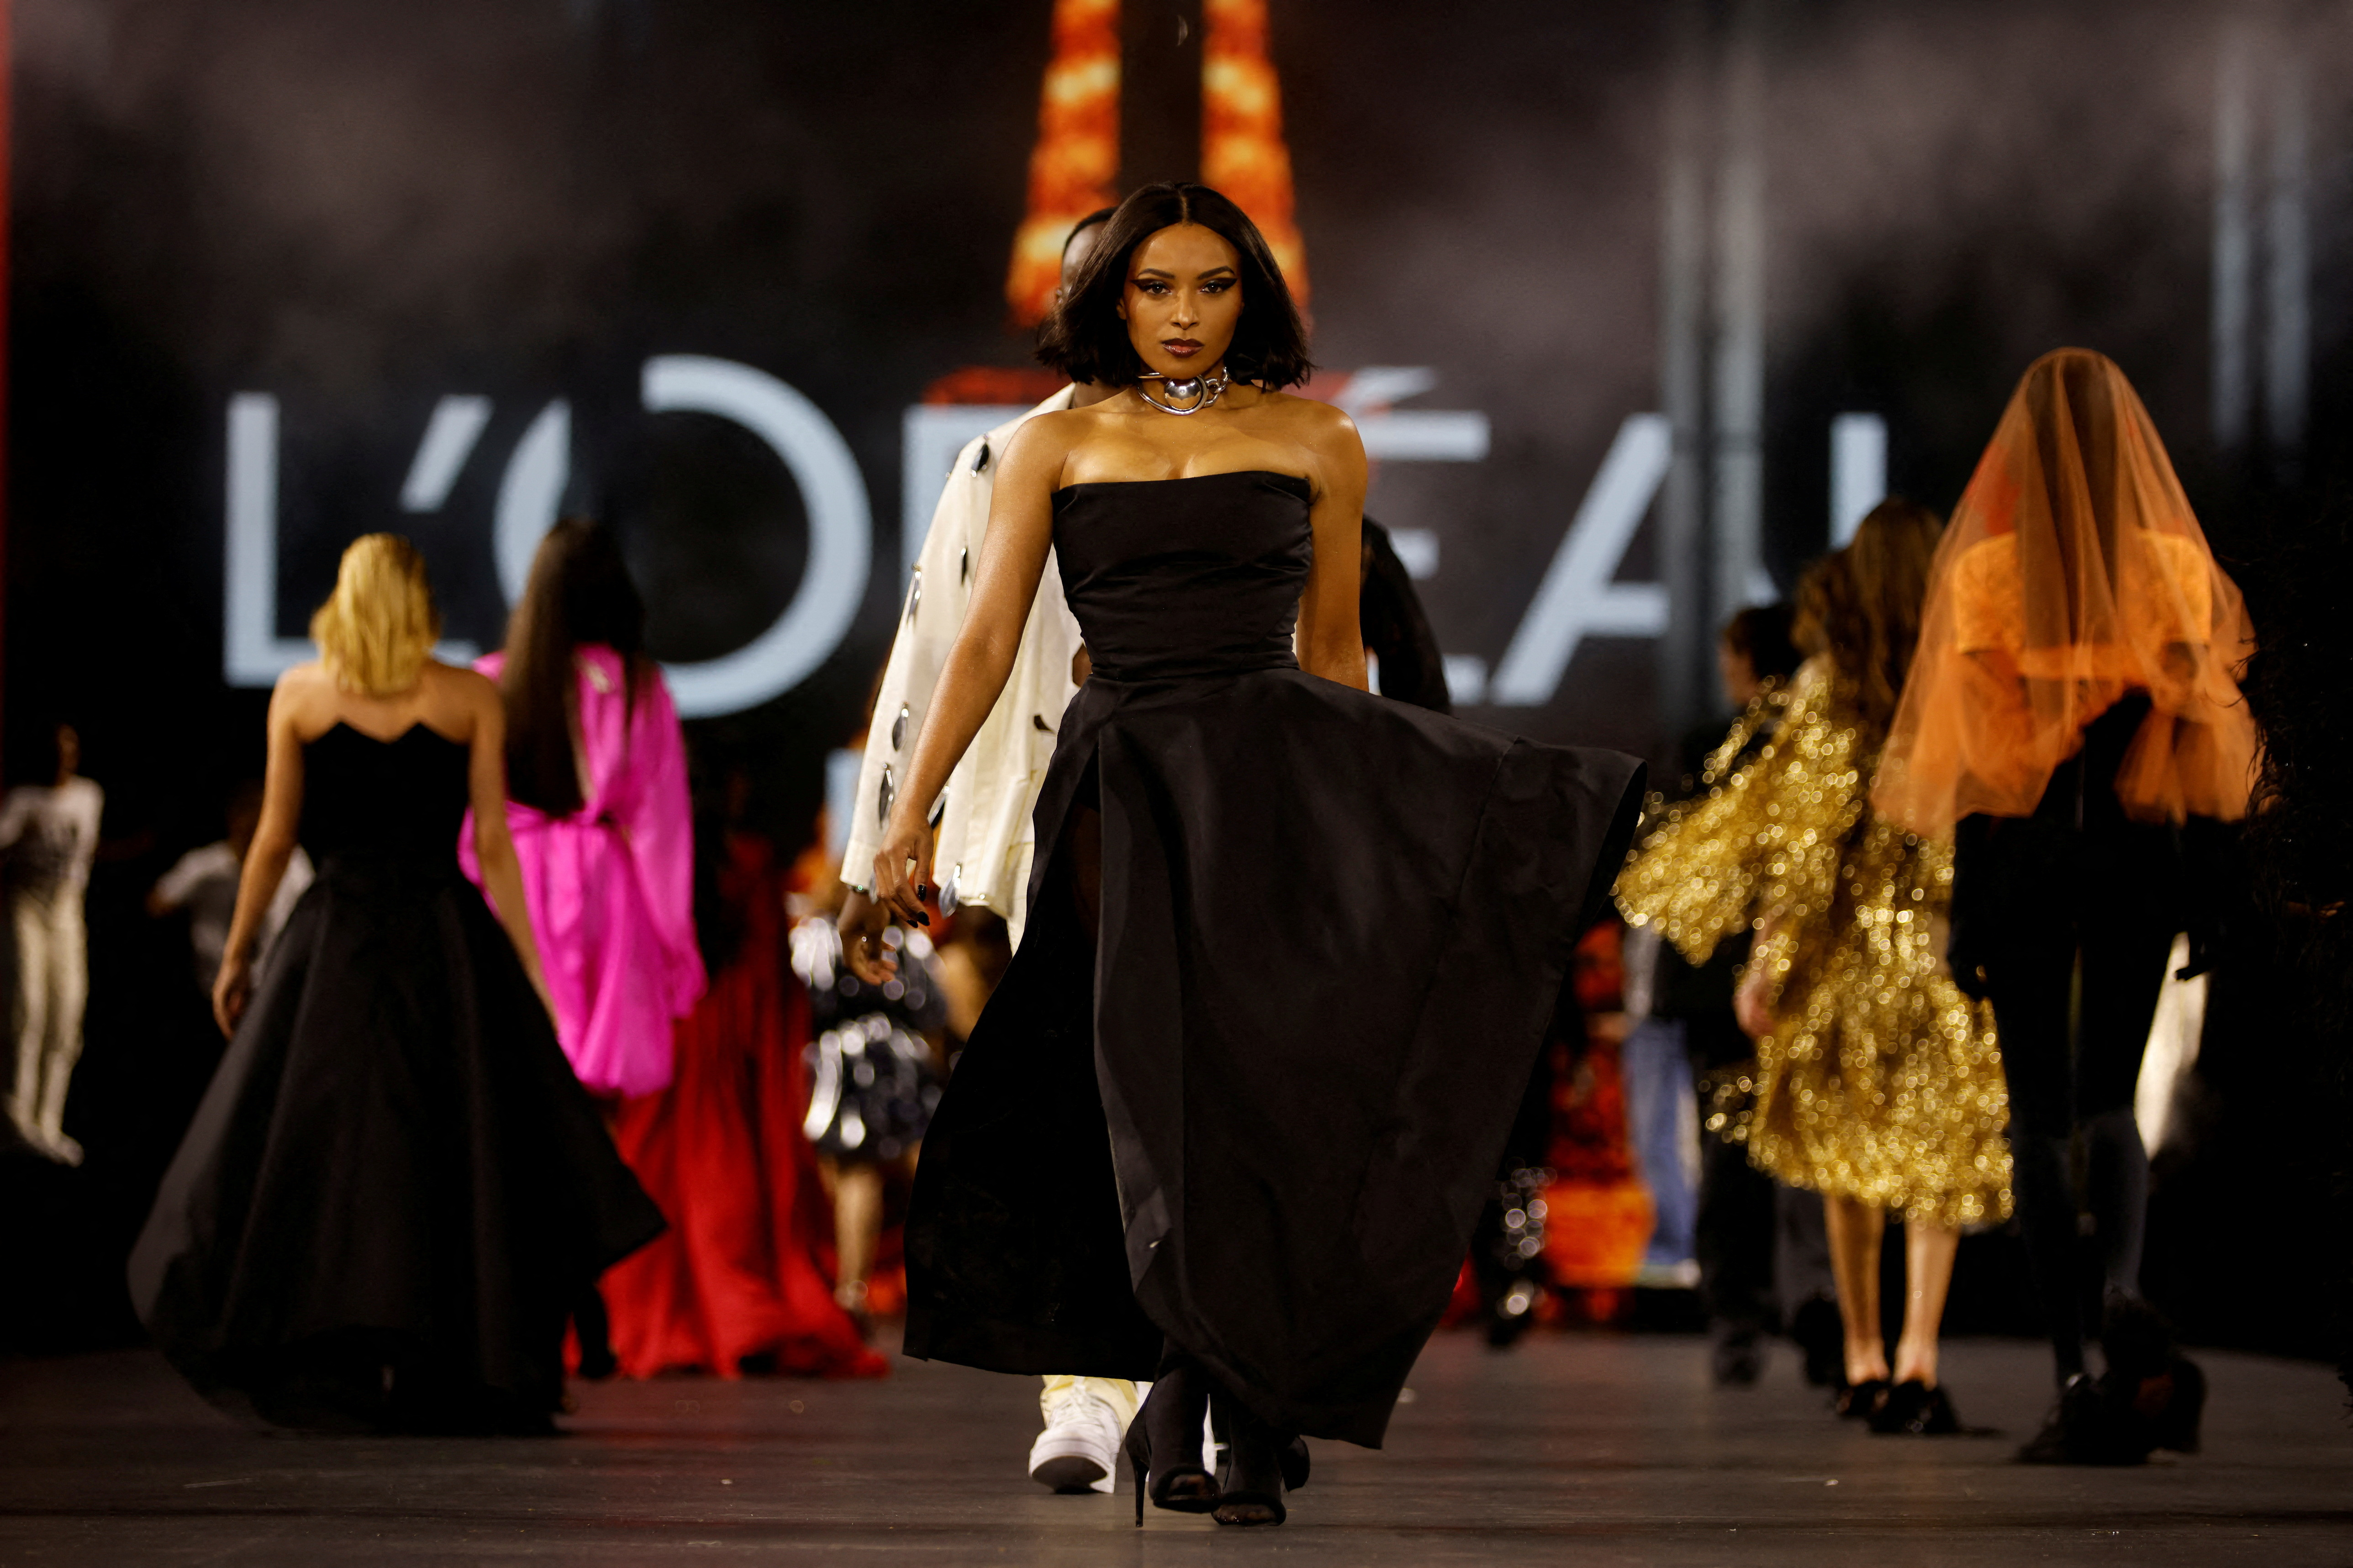 L'Oreal event show as part of Paris Fashion Week in Paris